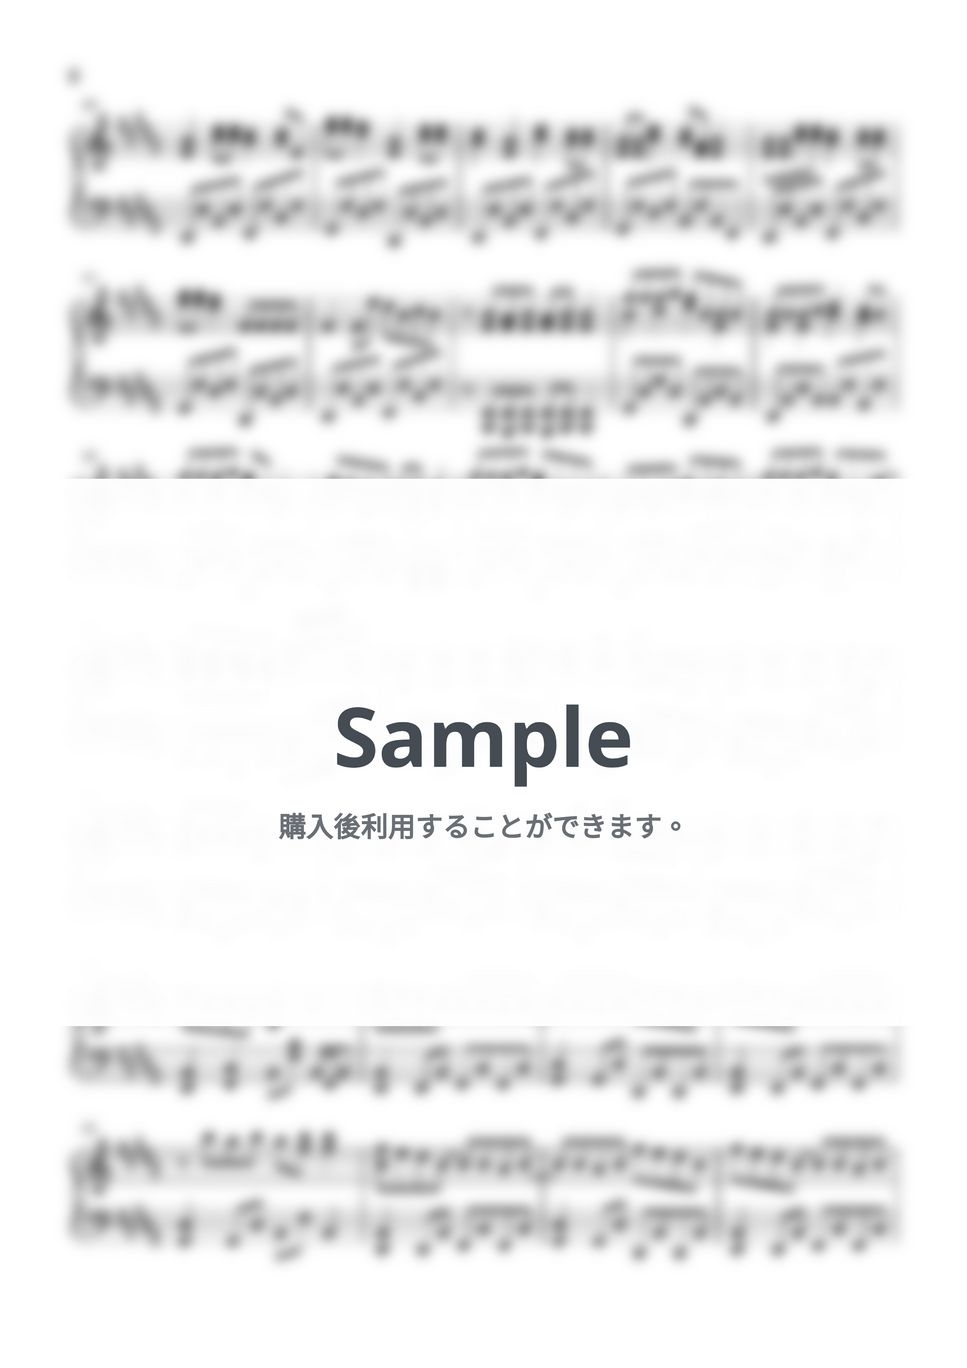 Mrs. GREEN APPLE - キコリ時計 (intermediate, piano) by Mopianic